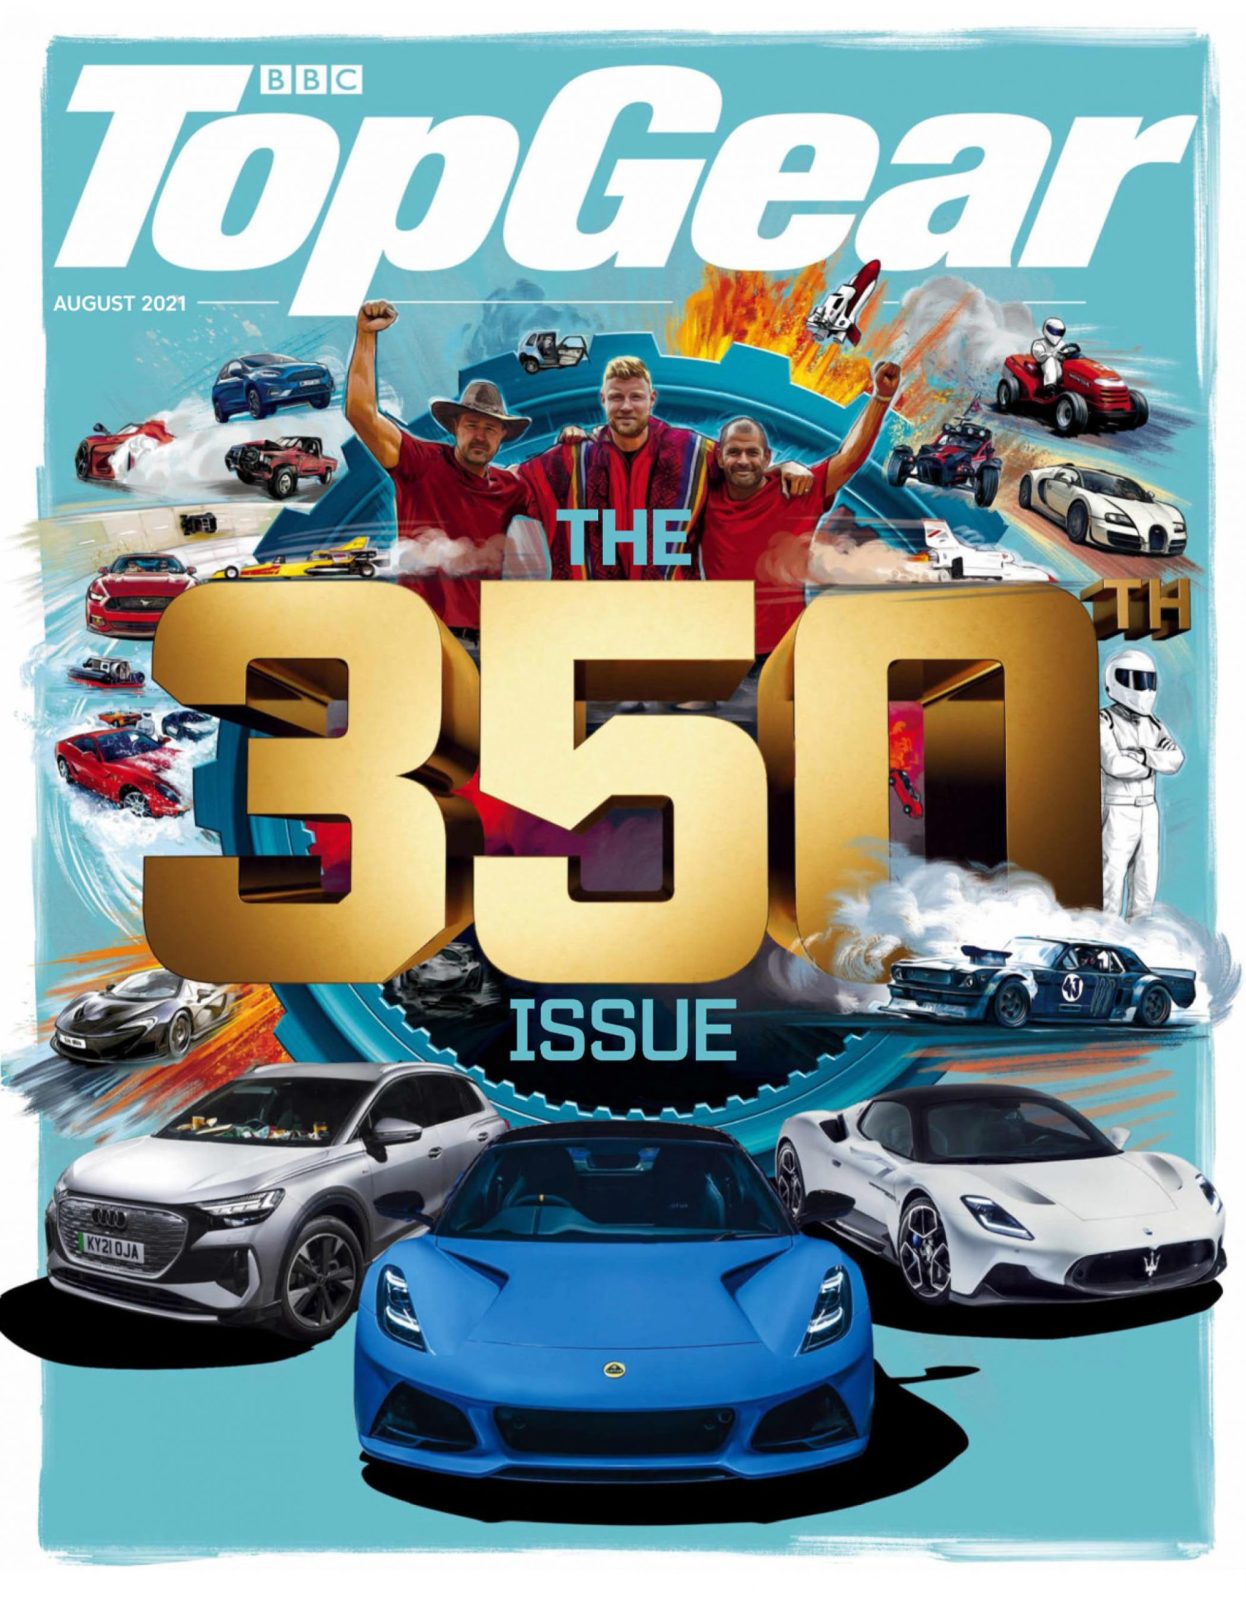 BBC Top Gear BBC疯狂汽车秀杂志 AUGUST 2021年8月刊